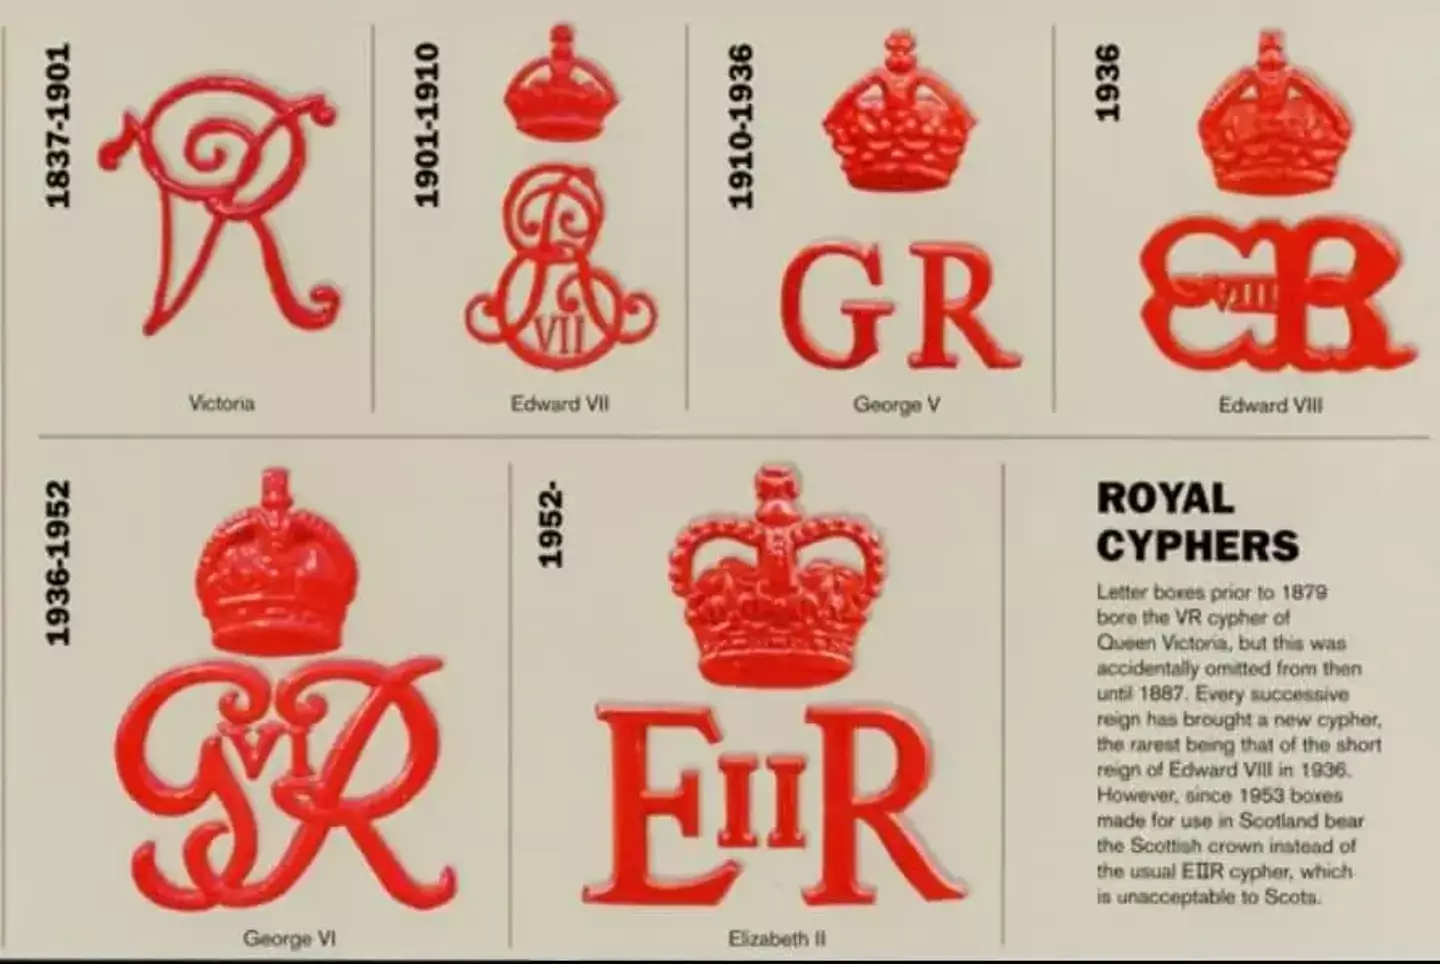 Each monarch gets their own unique royal cypher.